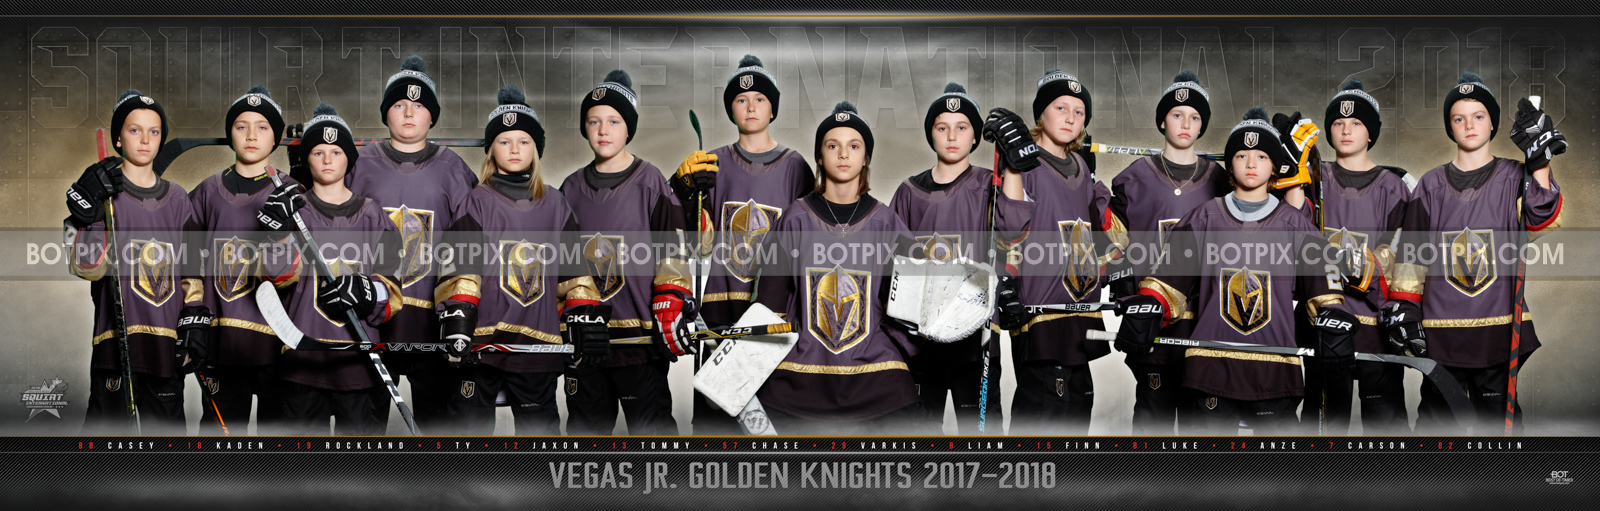 Vegas Jr. Golden Knights